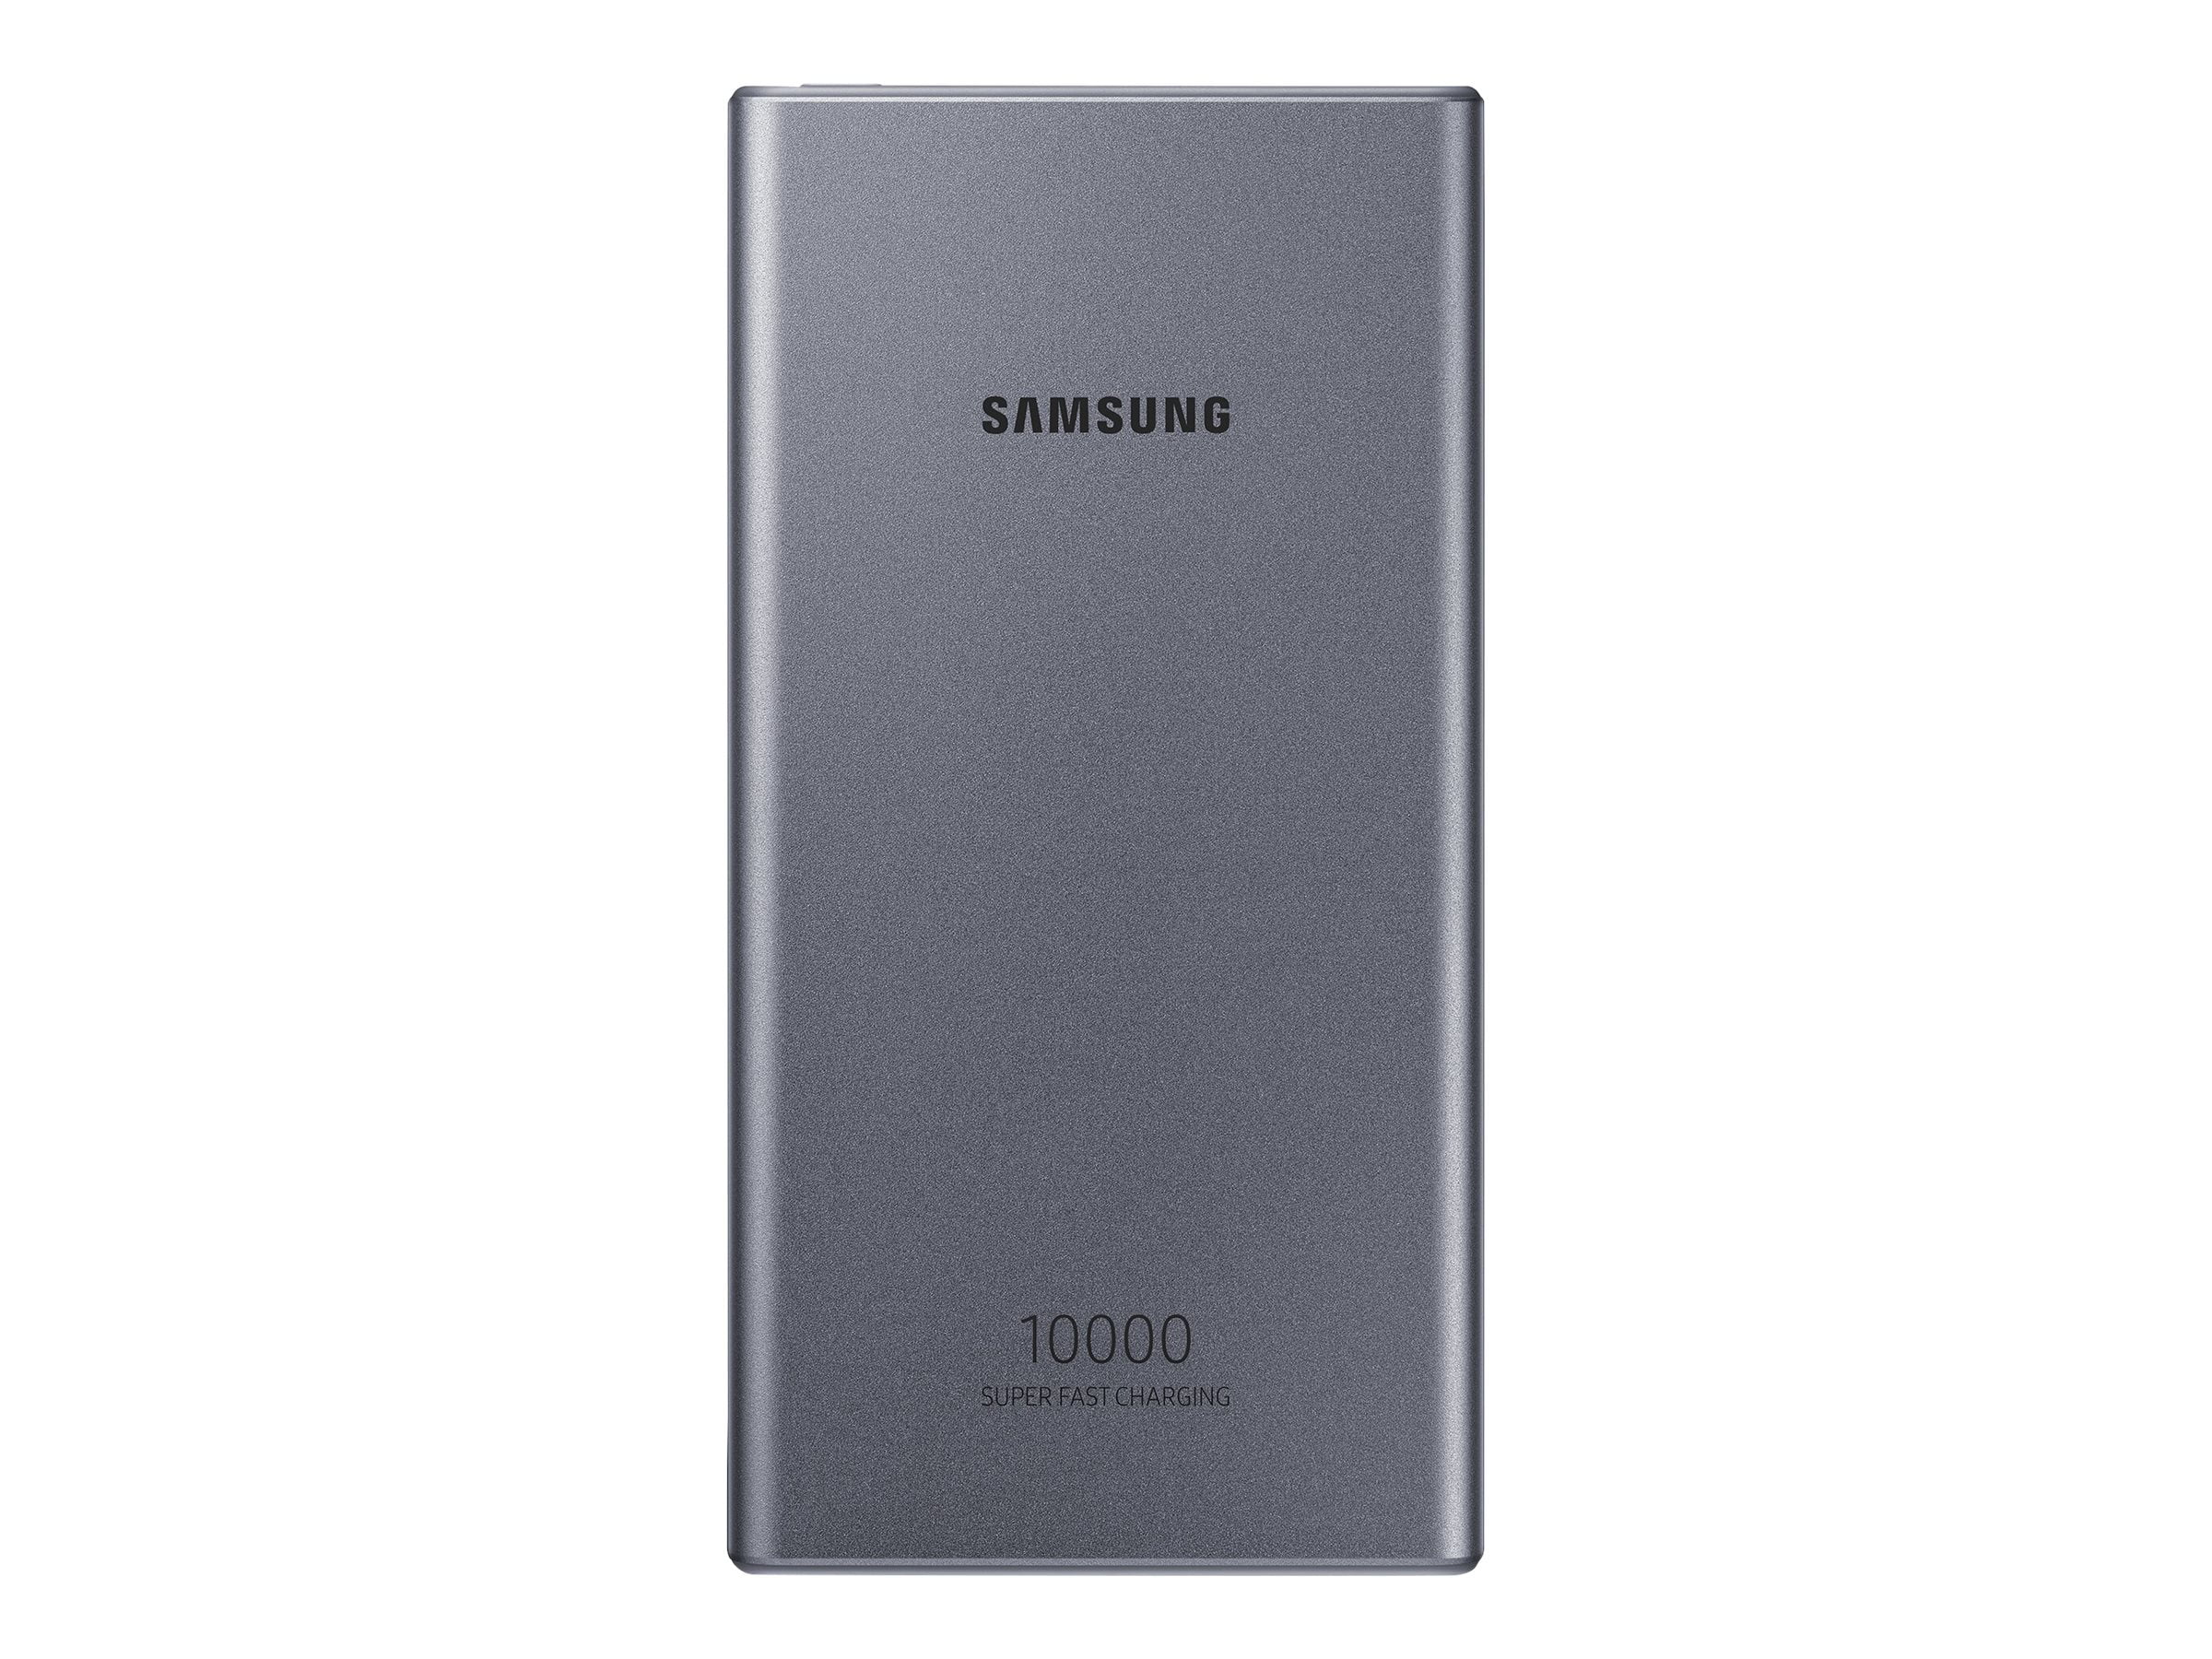 Samsung Portable Battery EB-P3300 Power bank - 10000 mAh - Watt PD, QC, AFC, SFC - 2 output connectors (USB, USB-C) - silver - Walmart.com